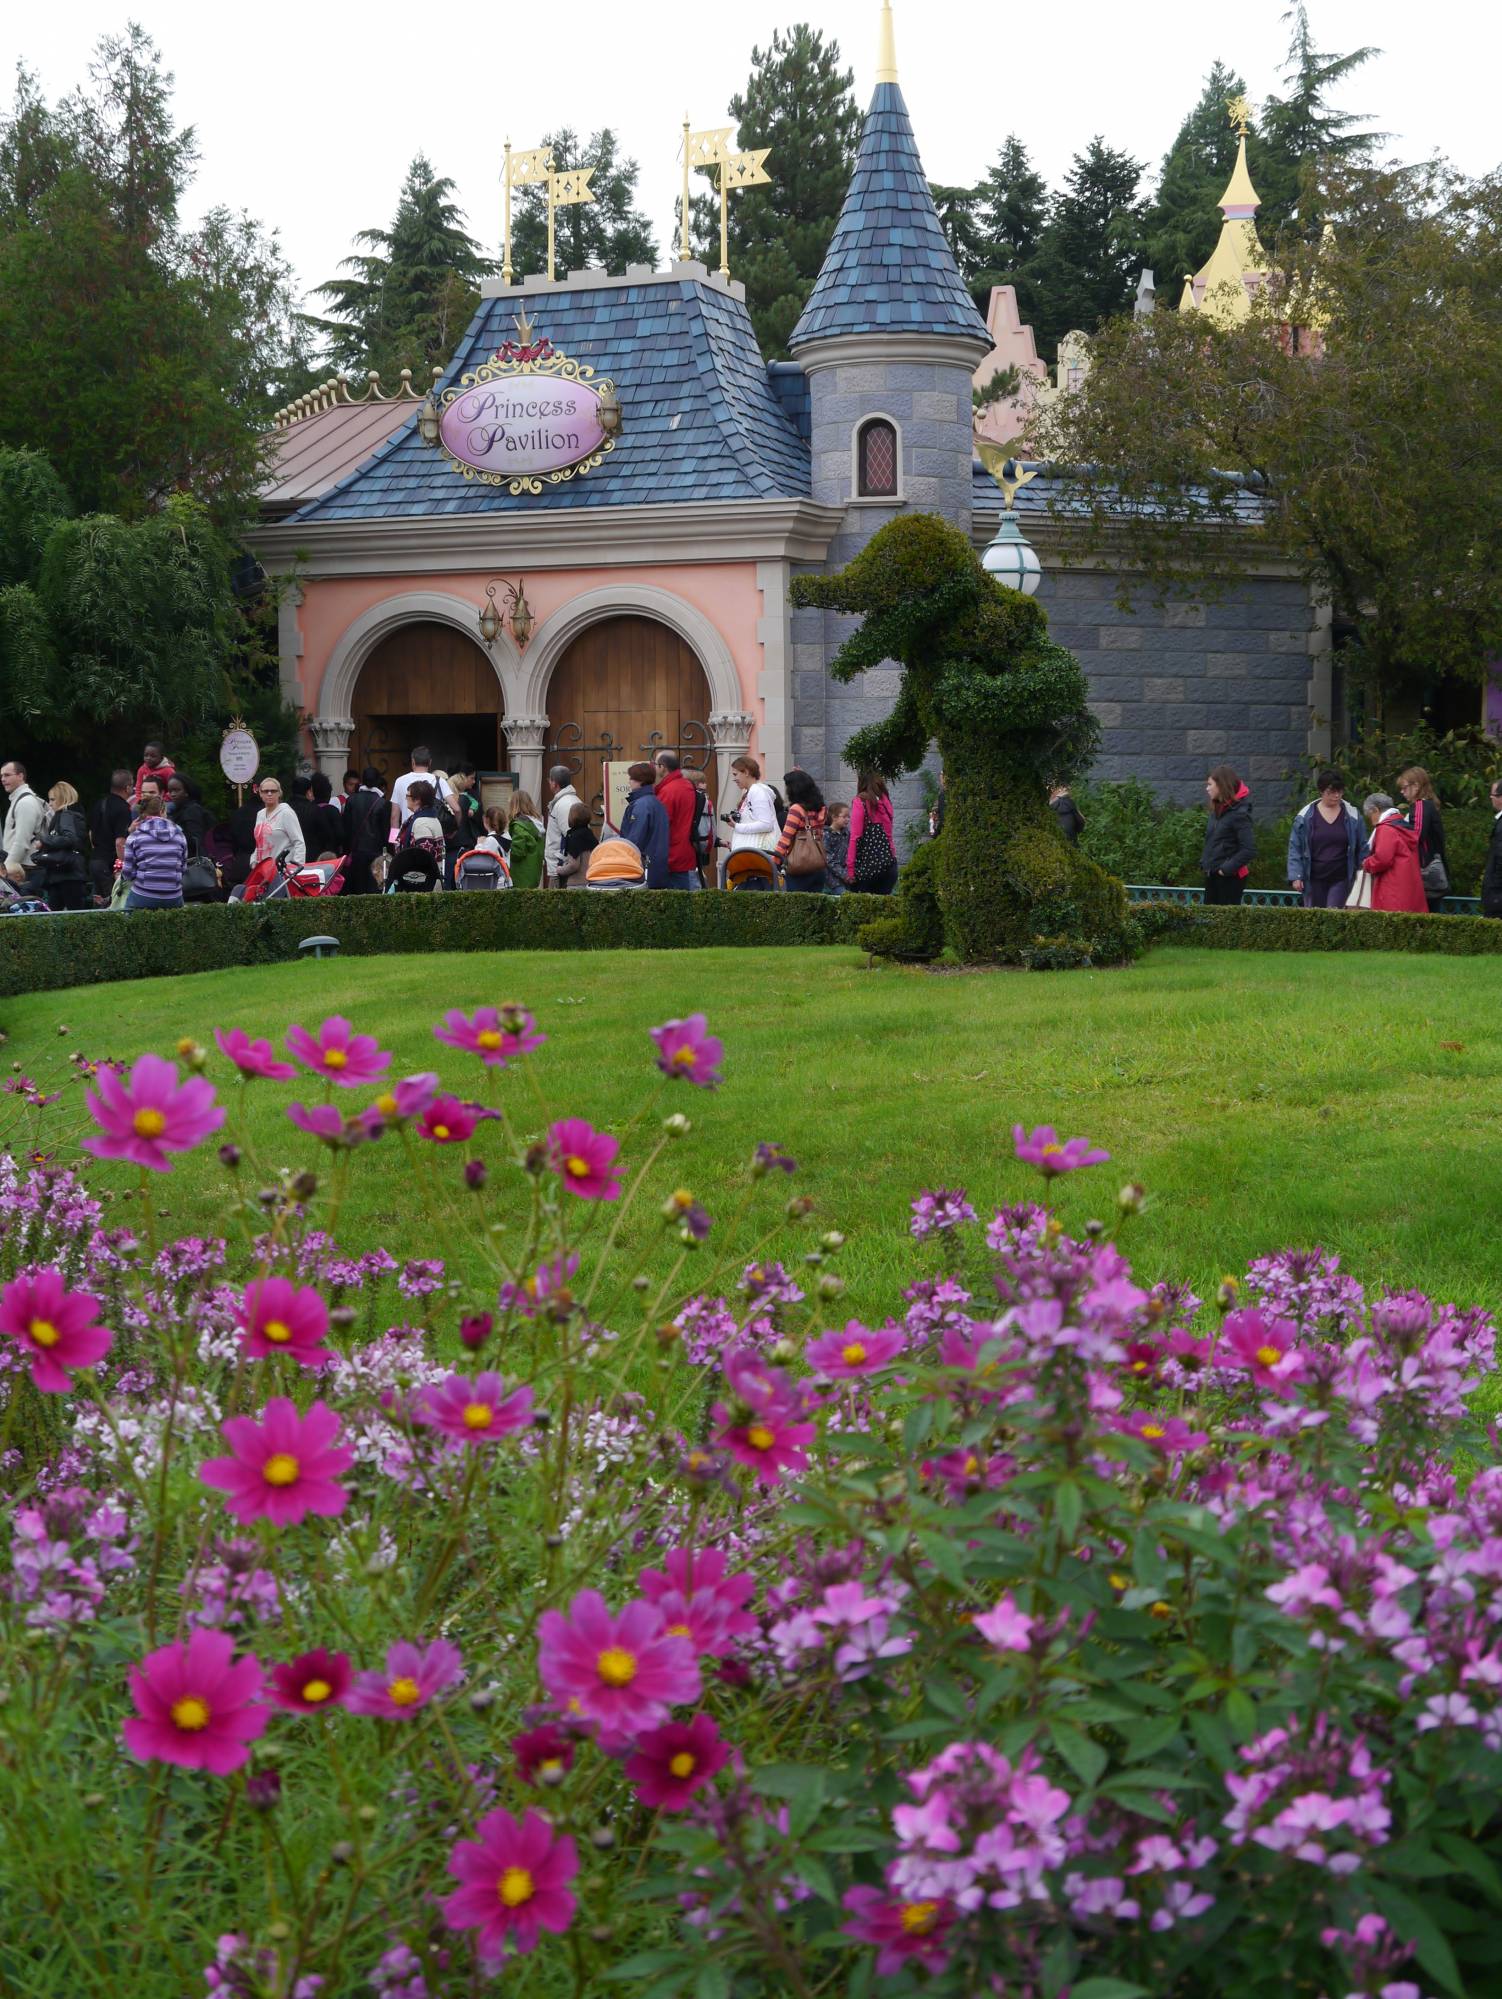 Disneyland Park - Princess Pavilion